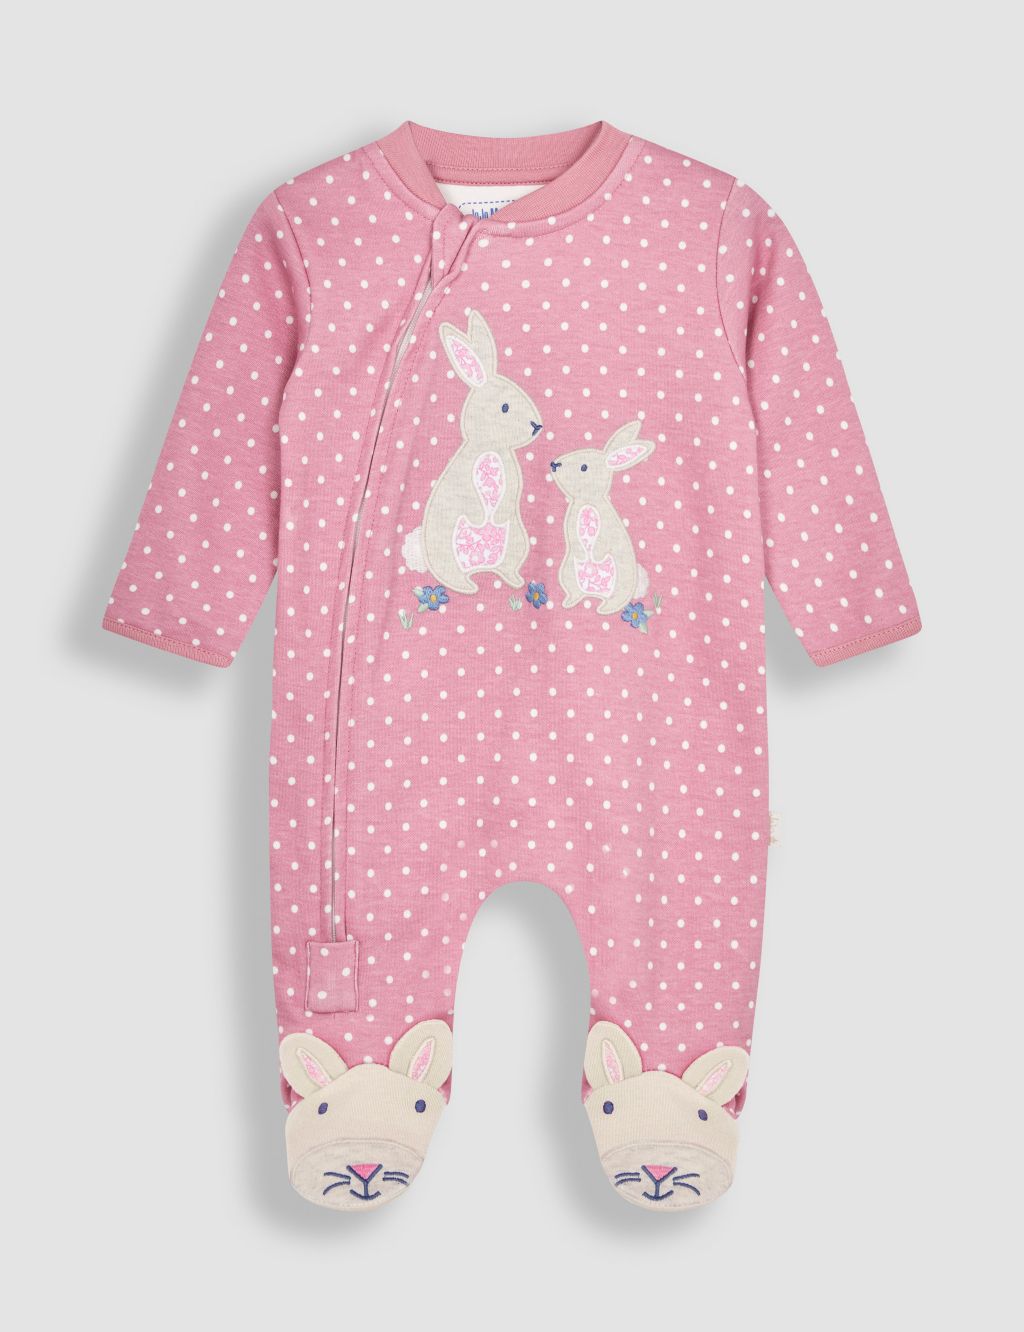 Buy JoJo Maman Bébé 2-Piece Baby Sleepsuit & Velour Jacket Set from the  JoJo Maman Bébé UK online shop